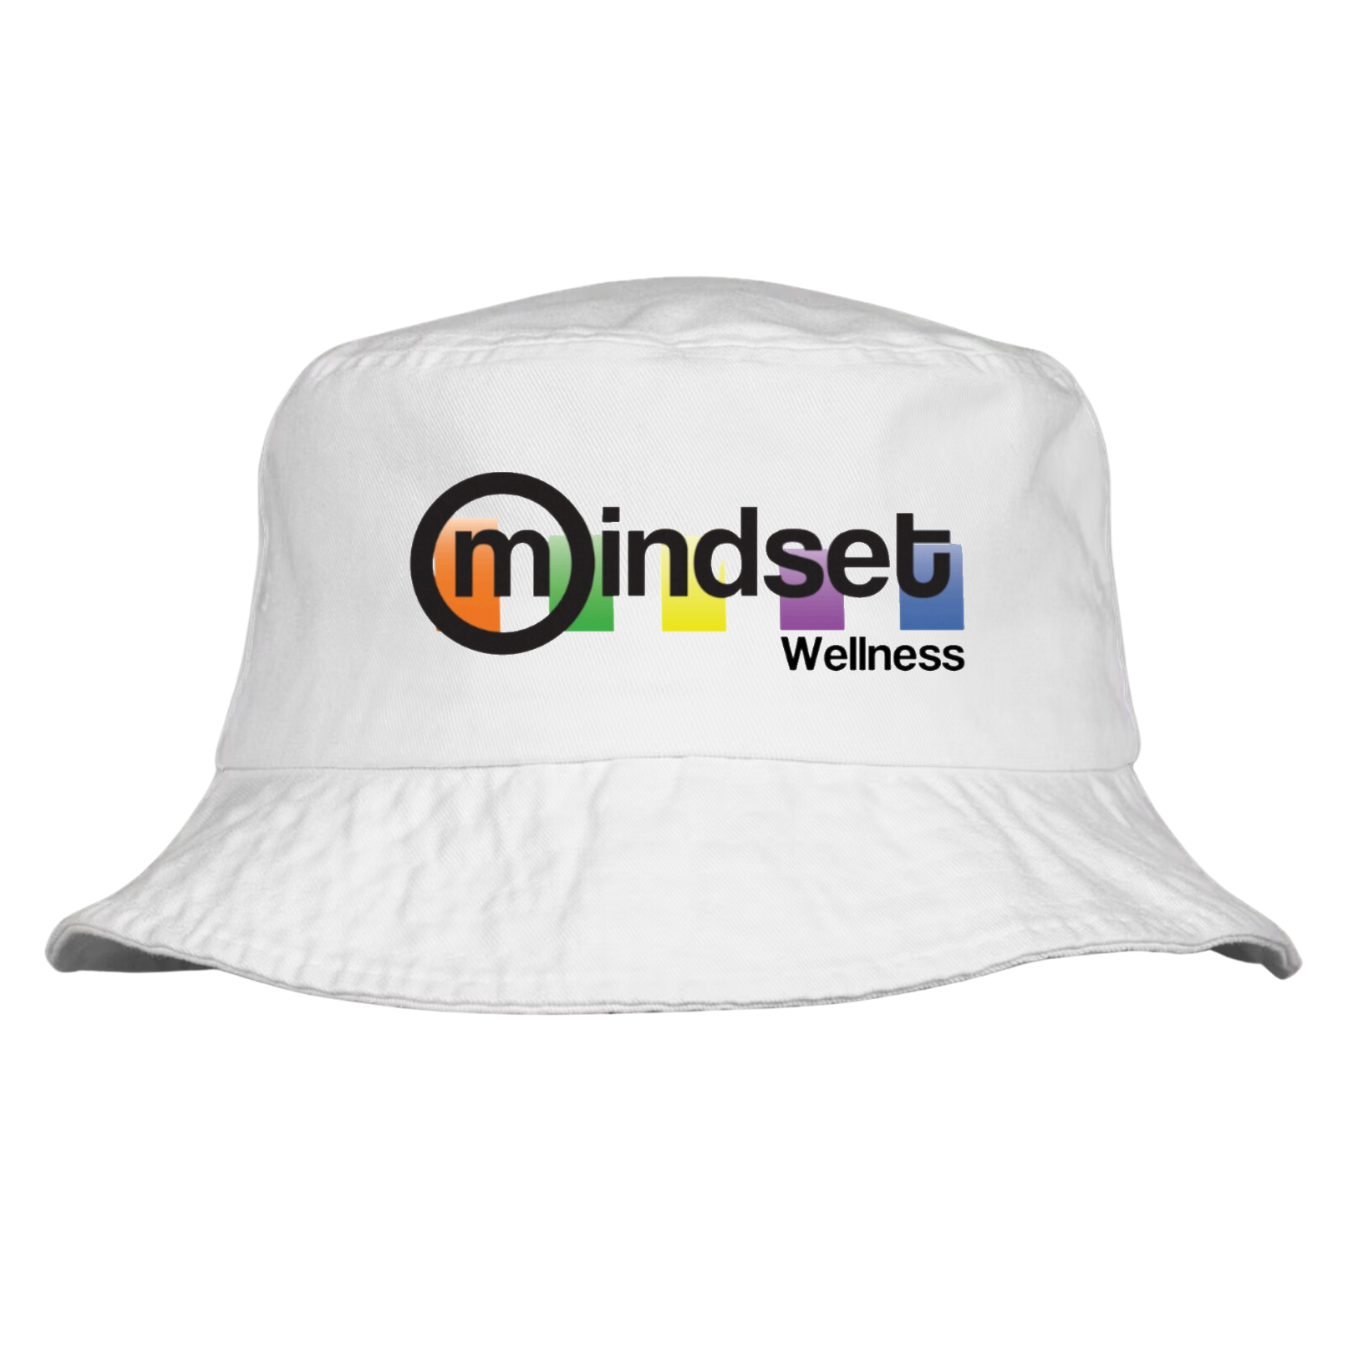 Mindset Limited Edition Bucket Hat